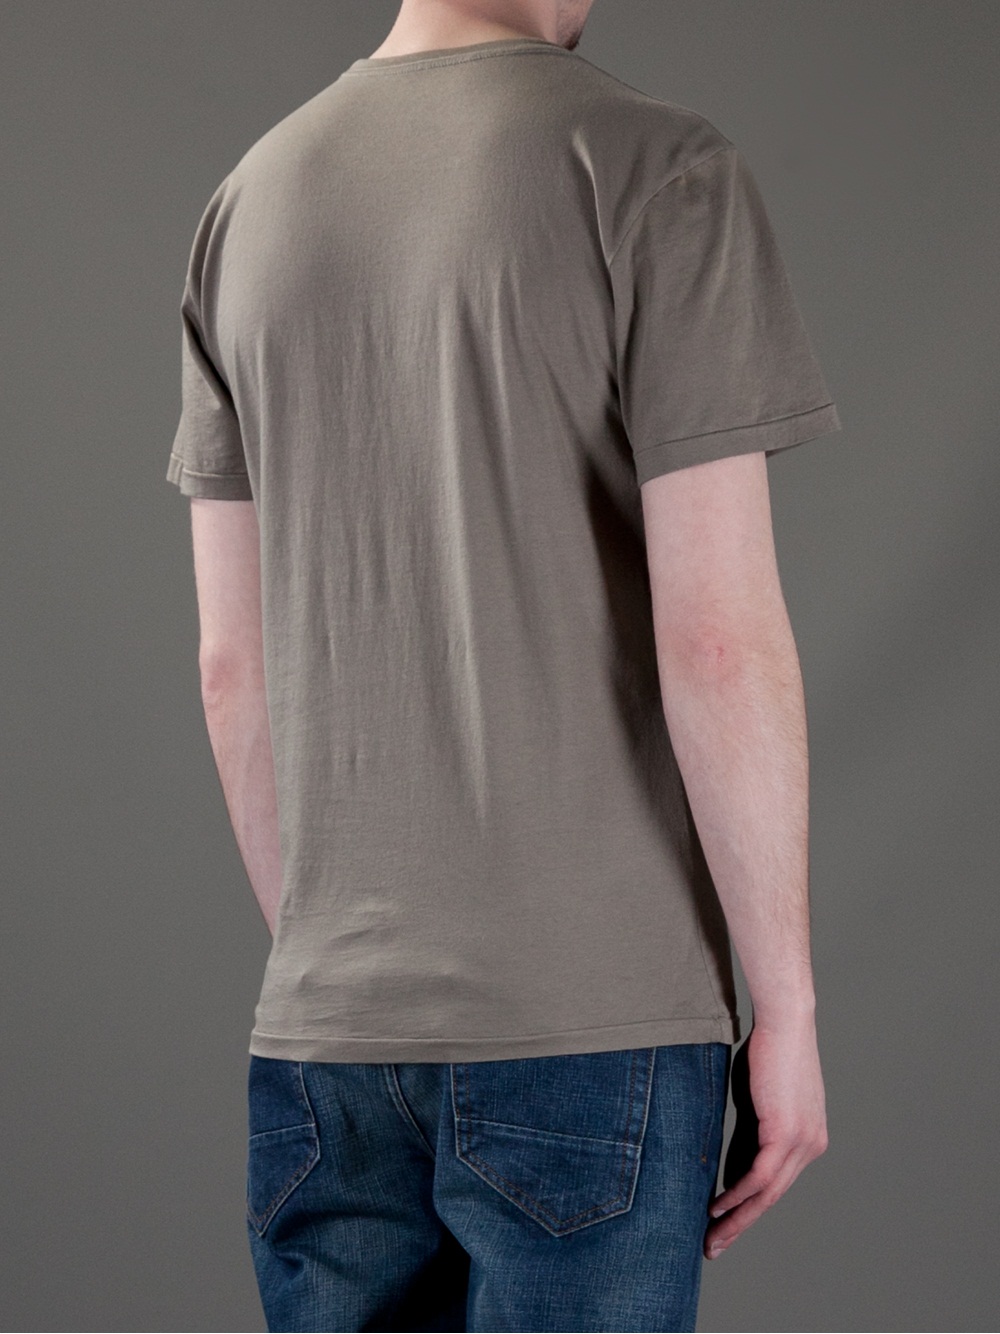 Lyst - Ralph lauren Patch Logo Tshirt in Natural for Men